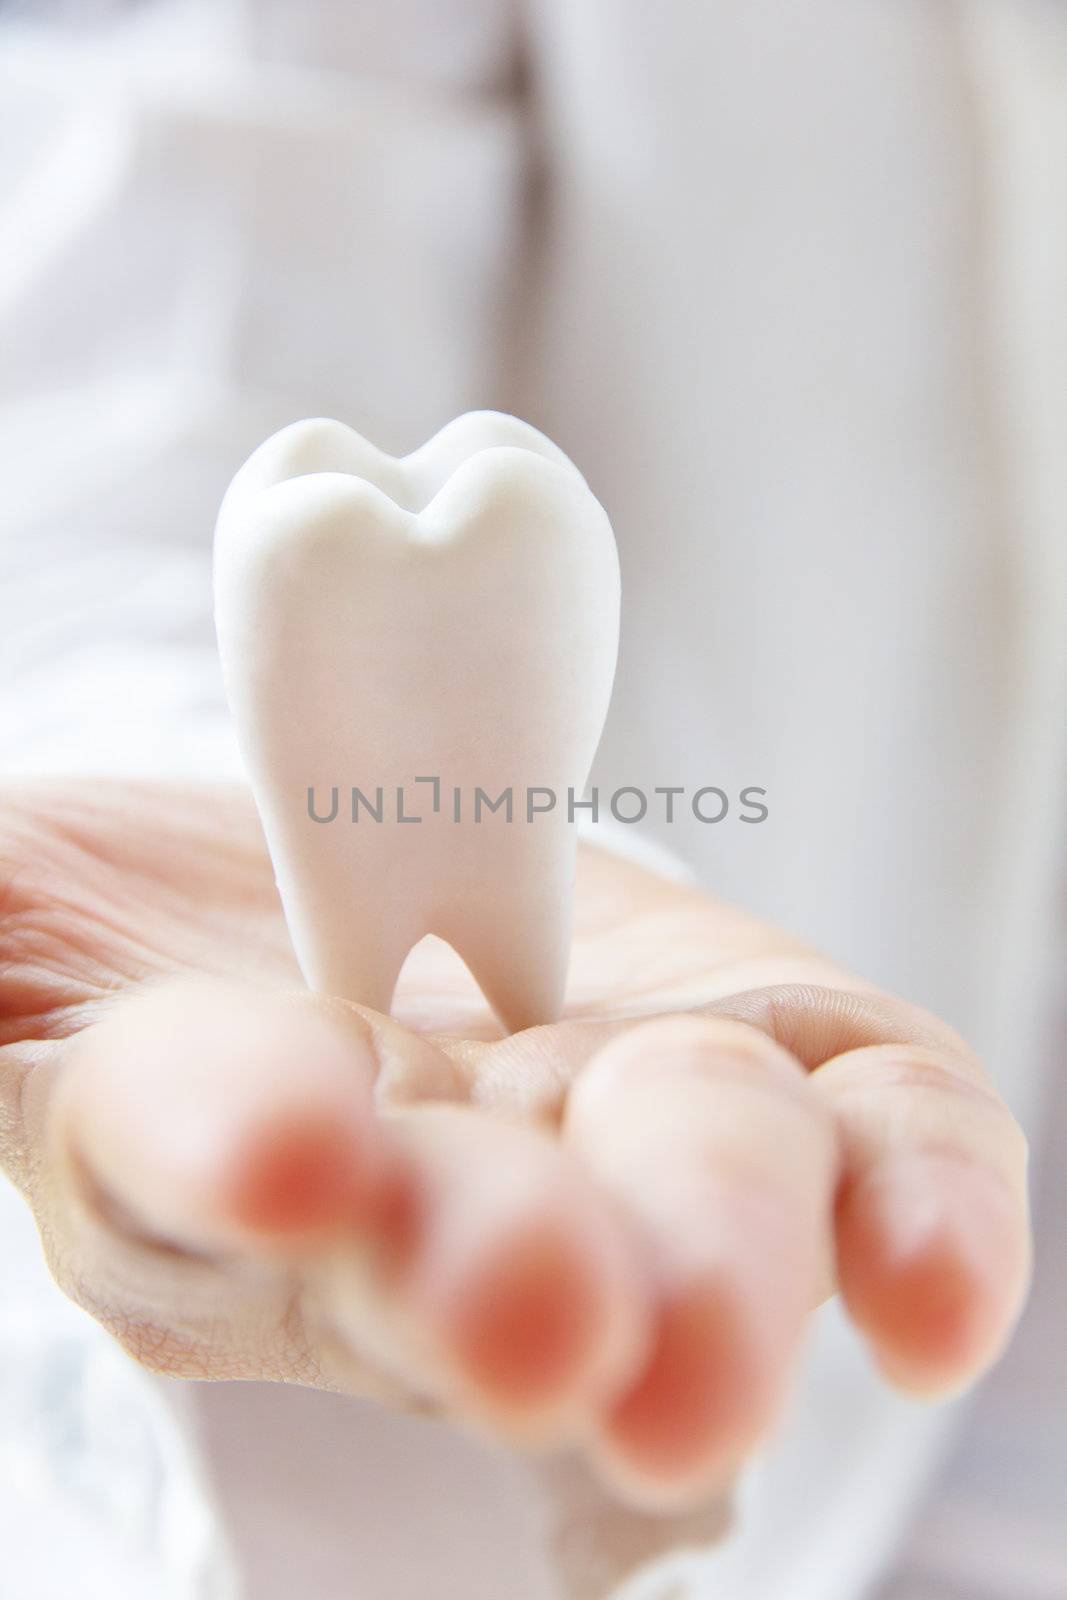 dentist holding molar by ponsulak